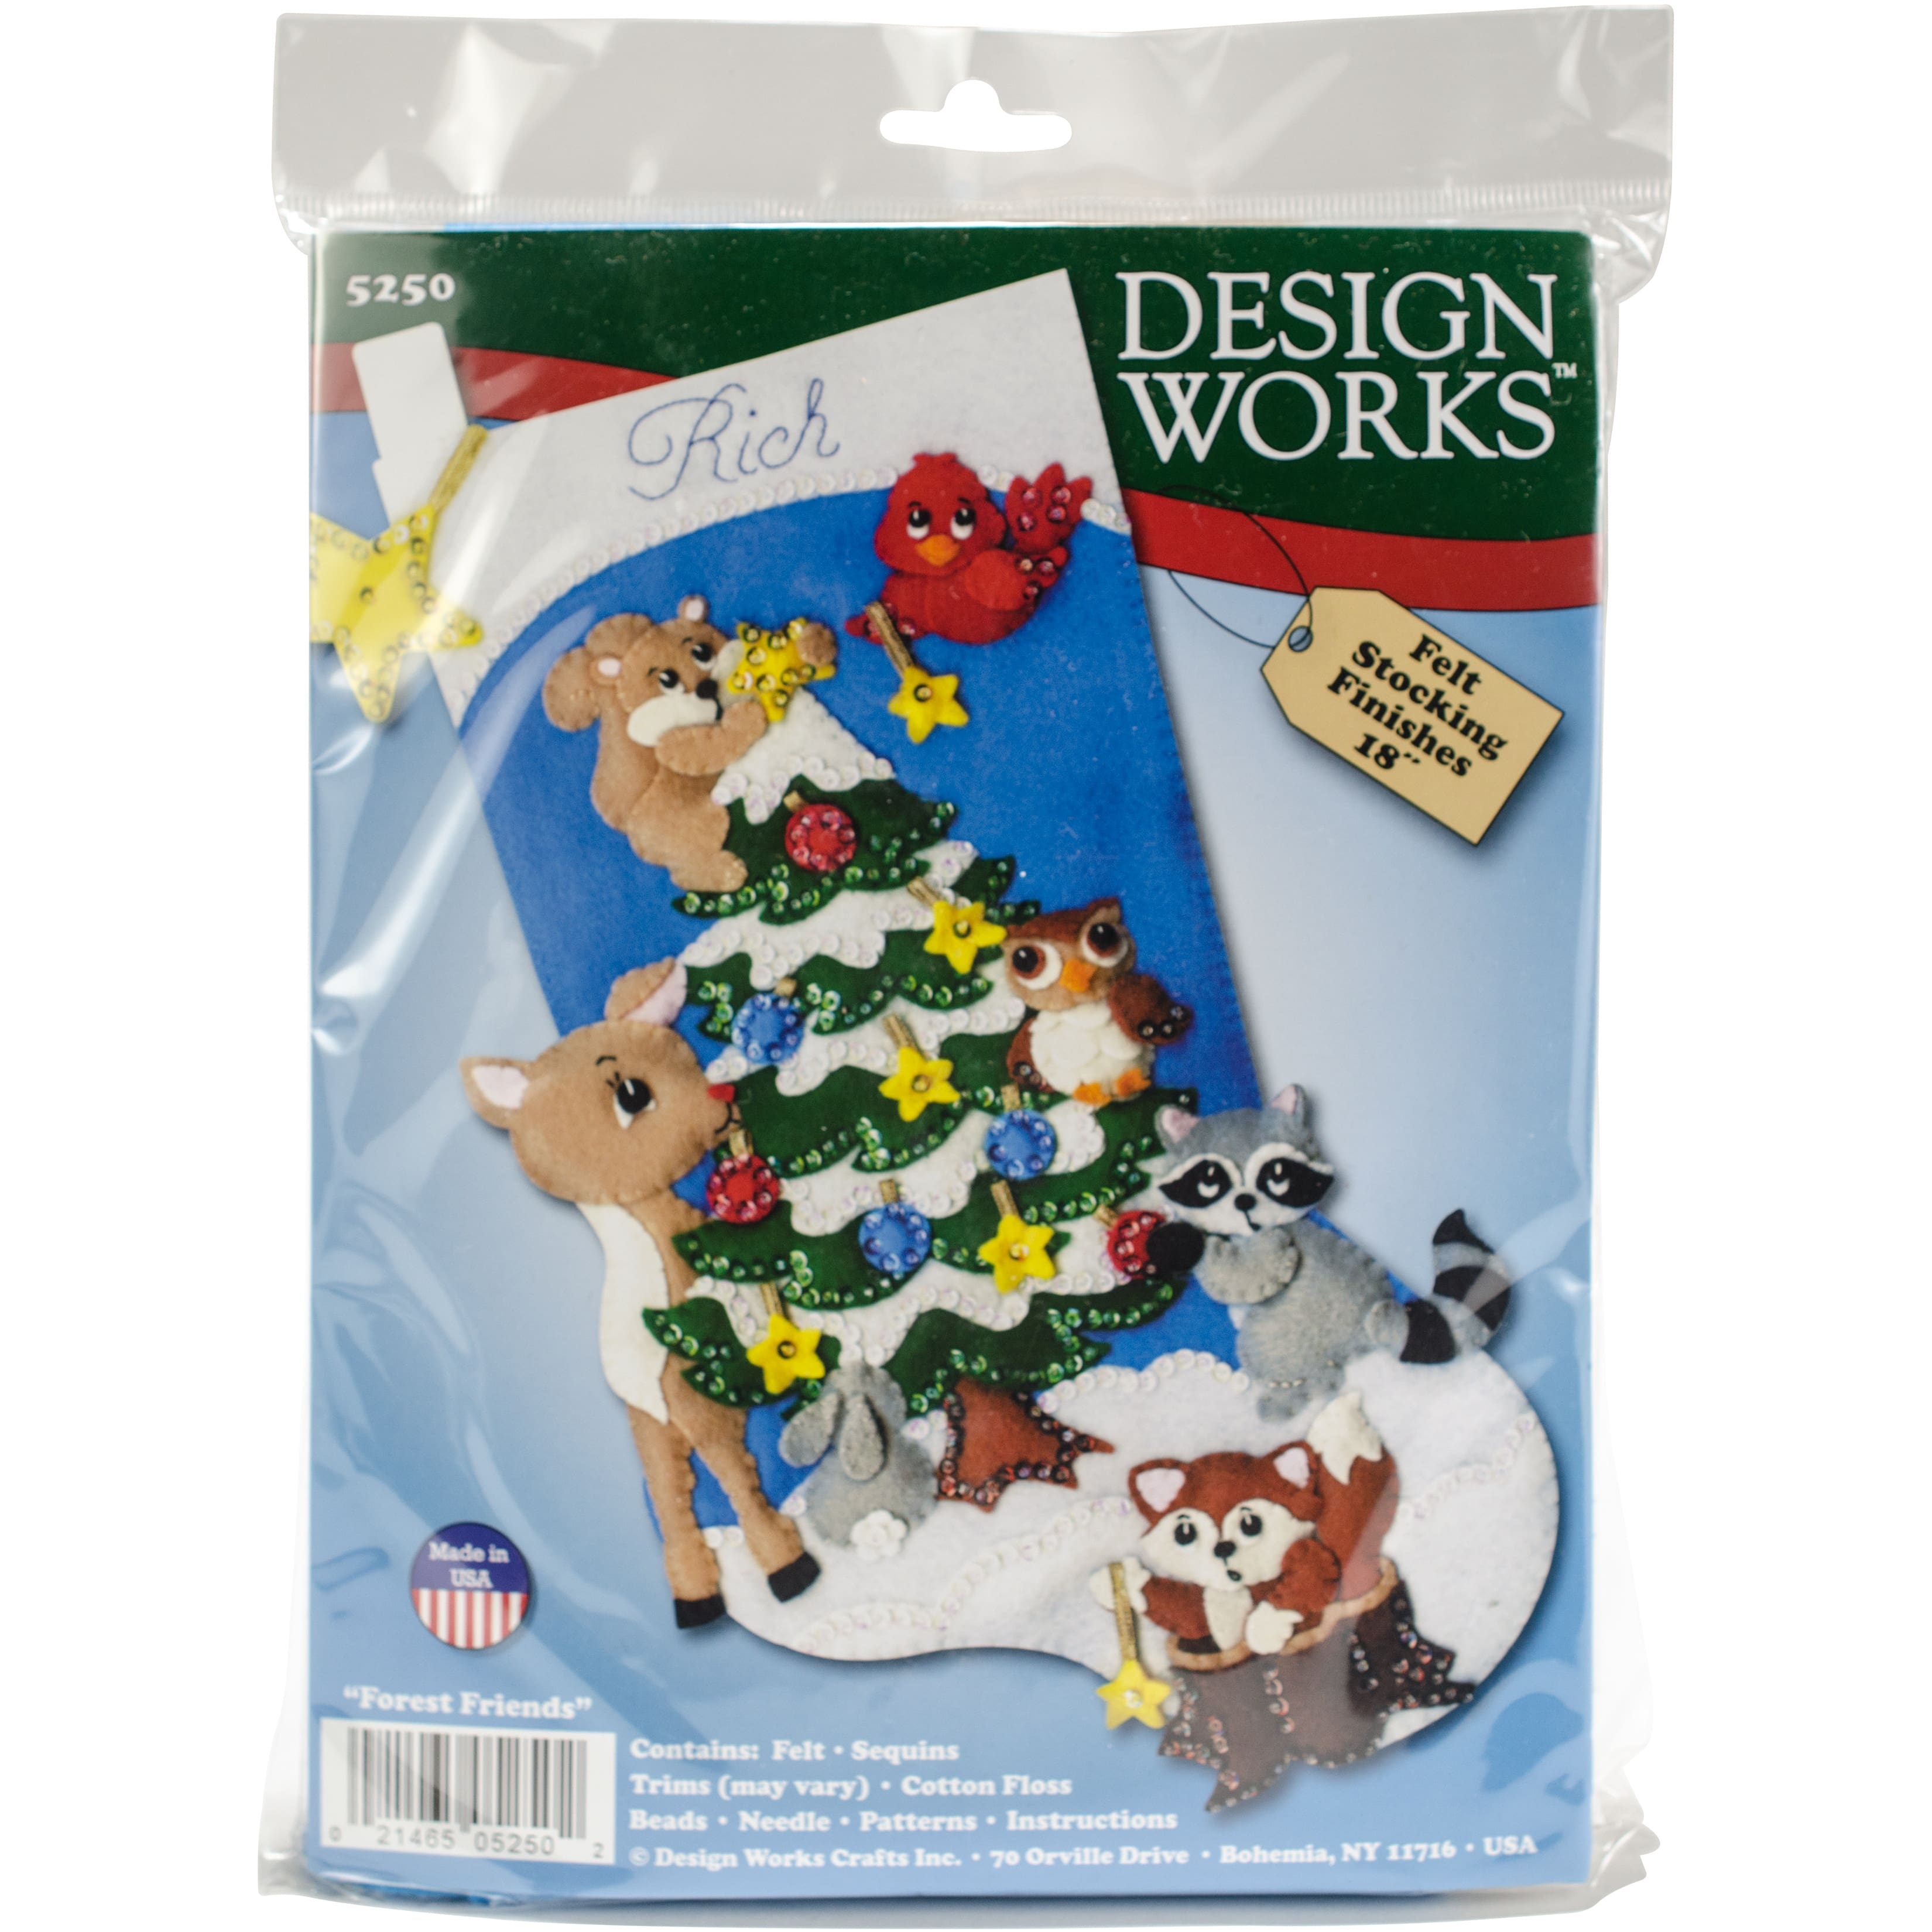 Dimensions® Gold Collection 16 Santa's Toys Stocking Needlepoint Kit